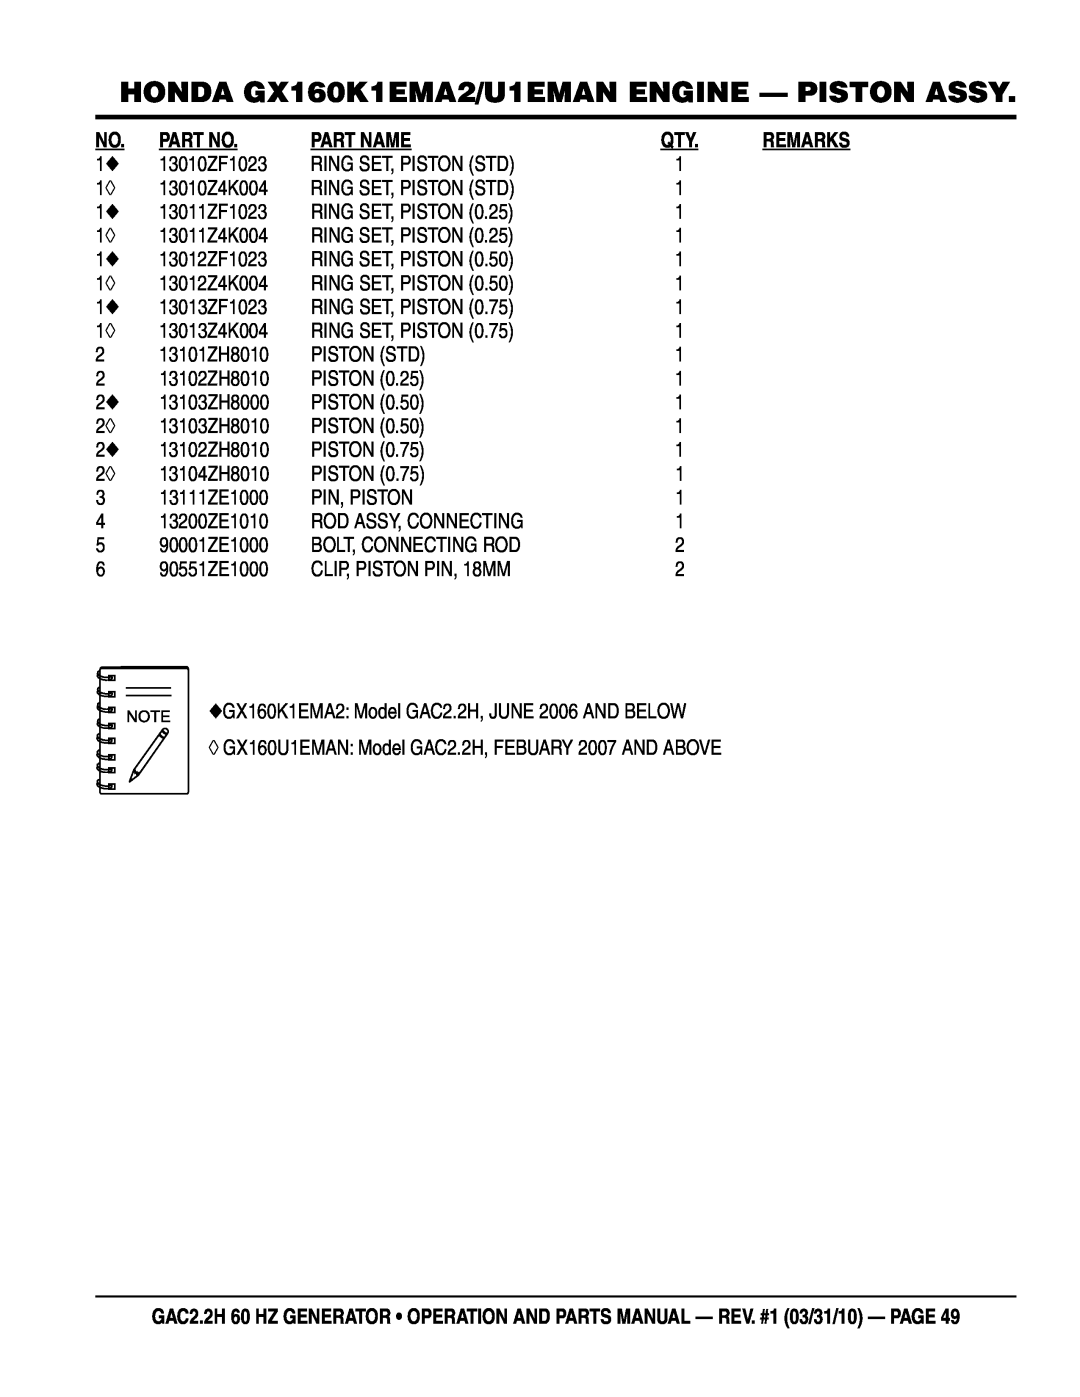 Multiquip GAC2.2H manual HONDA GX160K1EMA2/U1EMAN engine - PISTON assy, Part Name, 13010ZF1023 